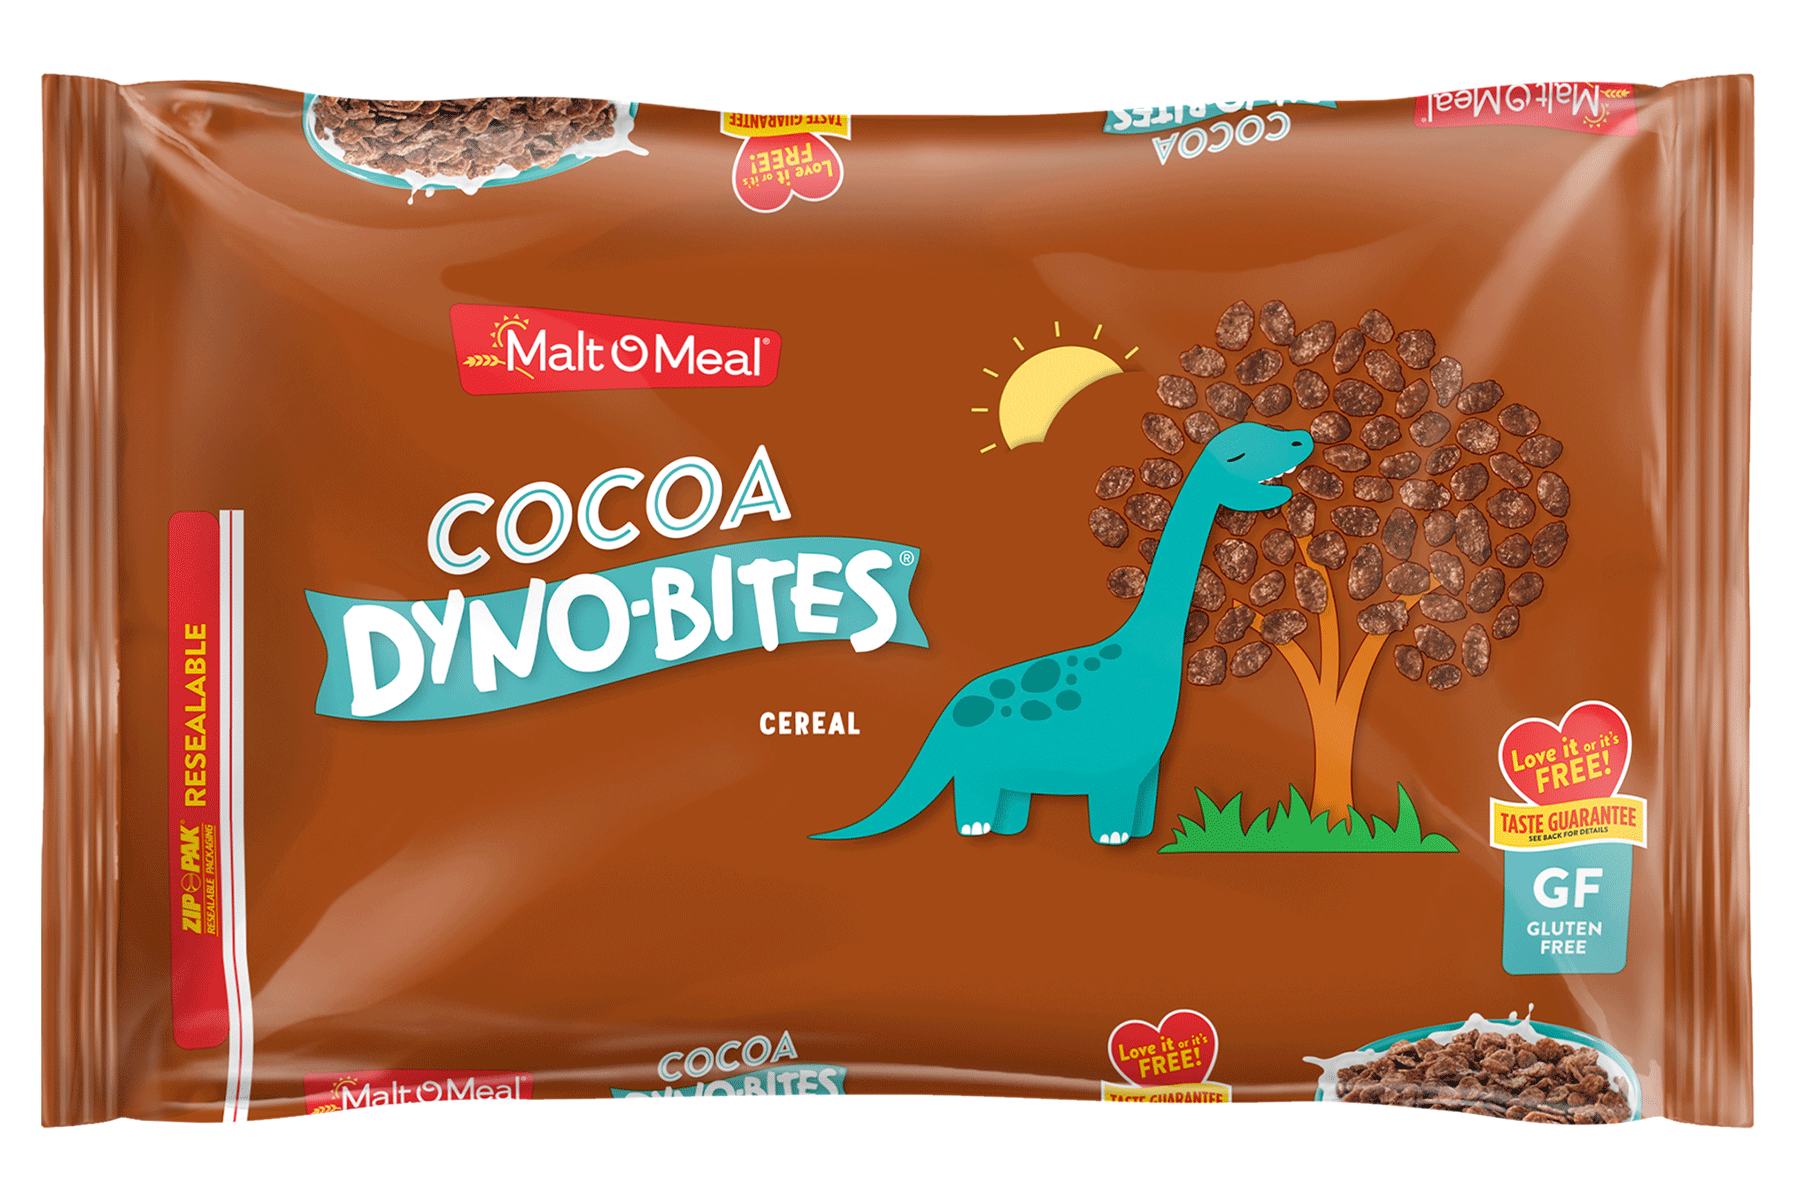 New Malt-O-Meal Cocoa Dyno Bites Cereal Bag